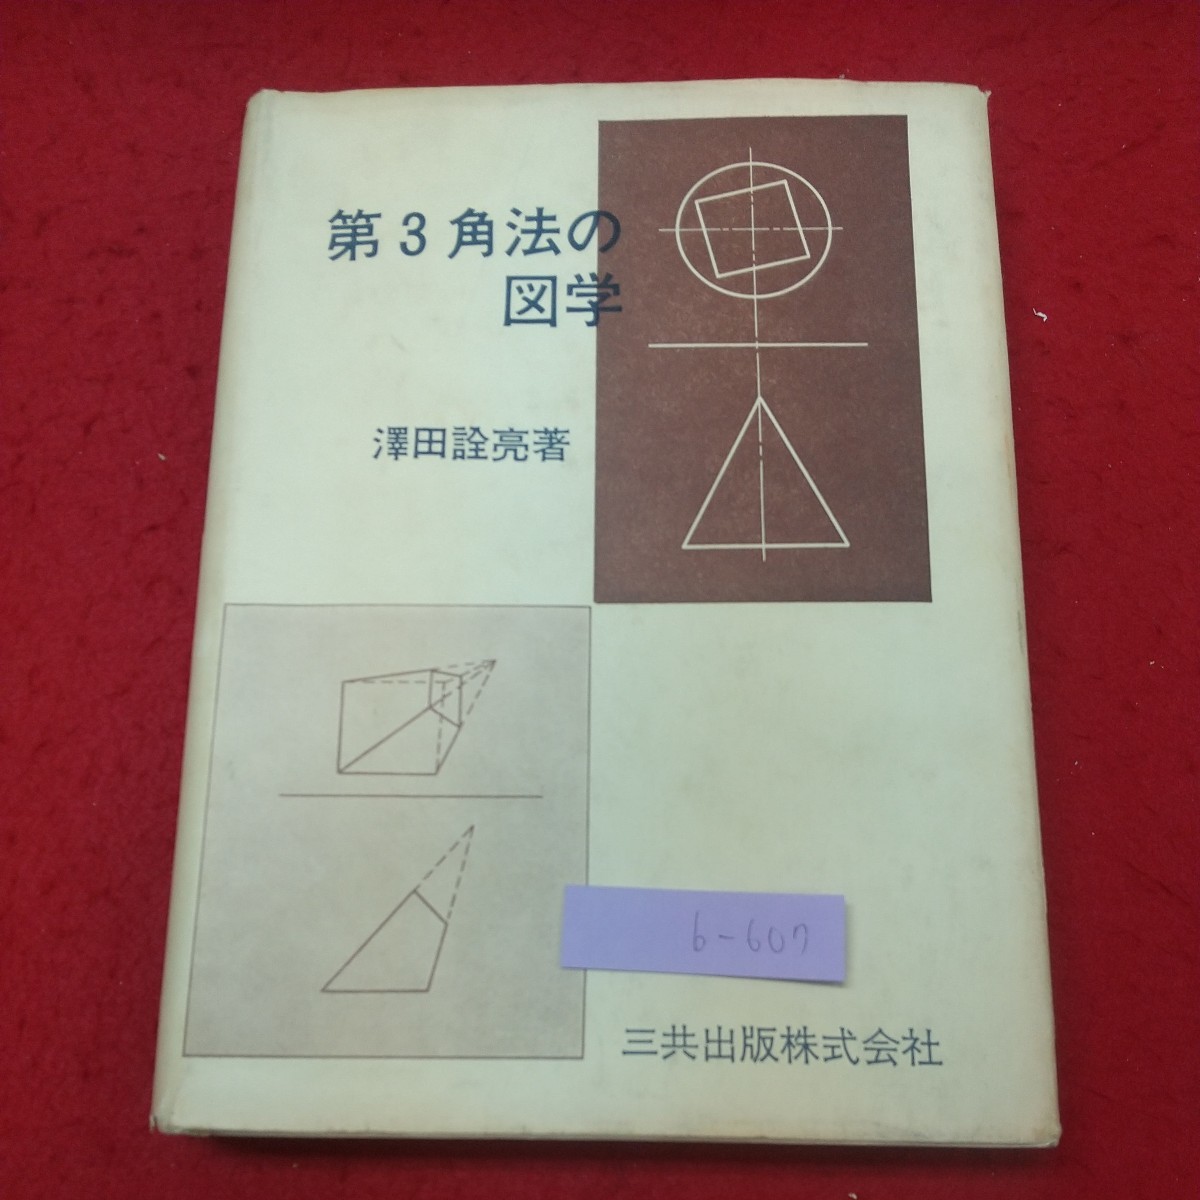 b-607 ※8 第3角法の図学 著者 澤田詮亮 昭和58年4月1日 9版発行 三共出版 数学 図学 幾何学 点 直線 平面 回転 曲線 立体 ねじれ面_カバーに日焼けあり 破れあり